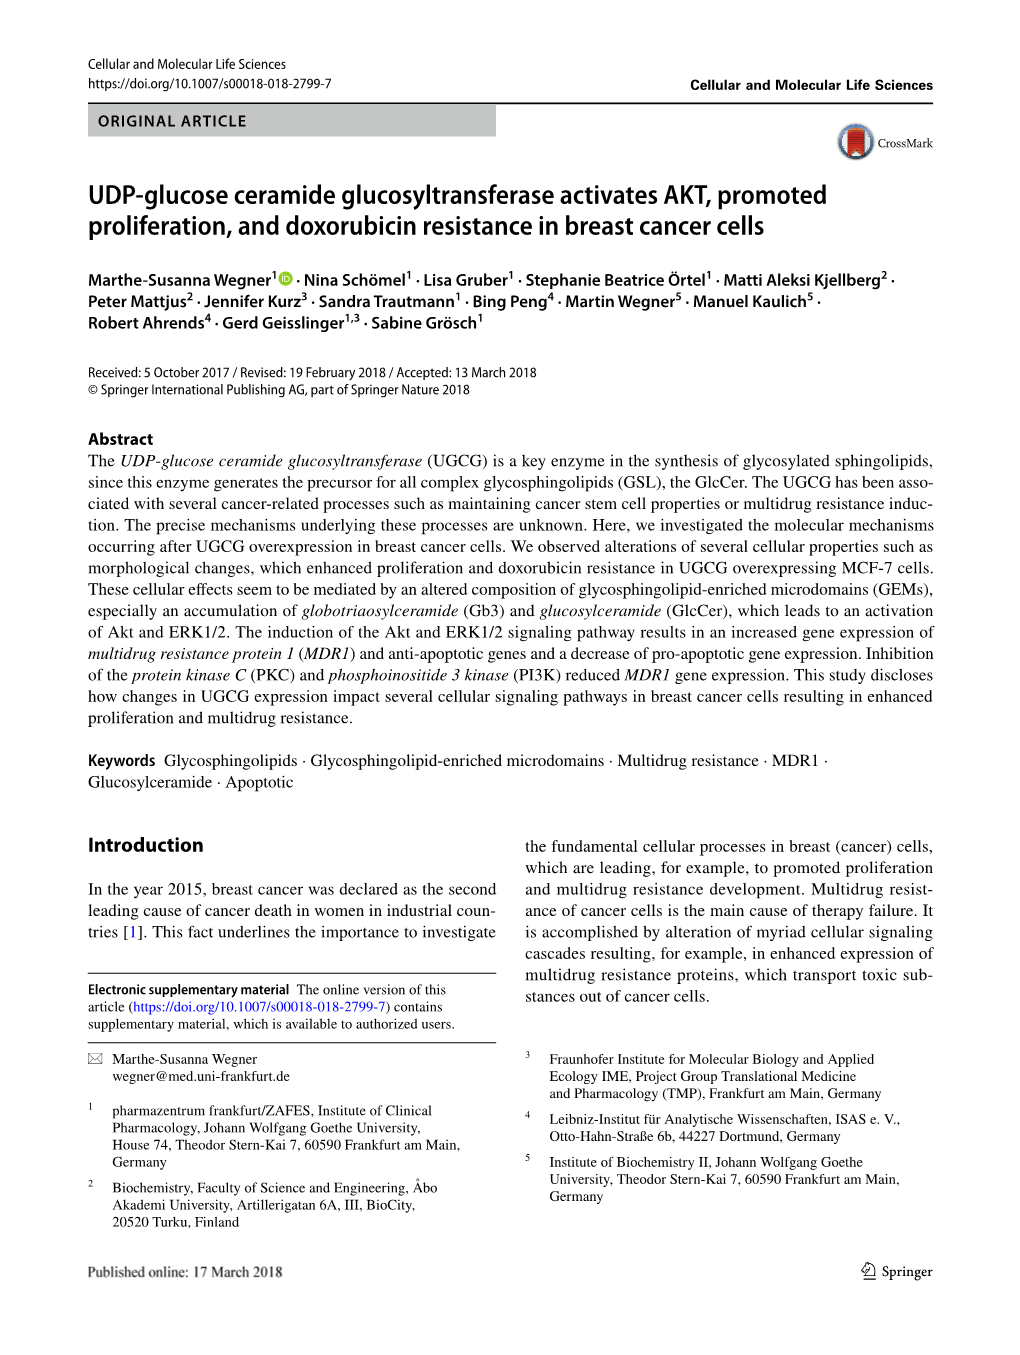 UDP-Glucose Ceramide Glucosyltransferase Activates AKT, Promoted Proliferation, and Doxorubicin Resistance in Breast Cancer Cell